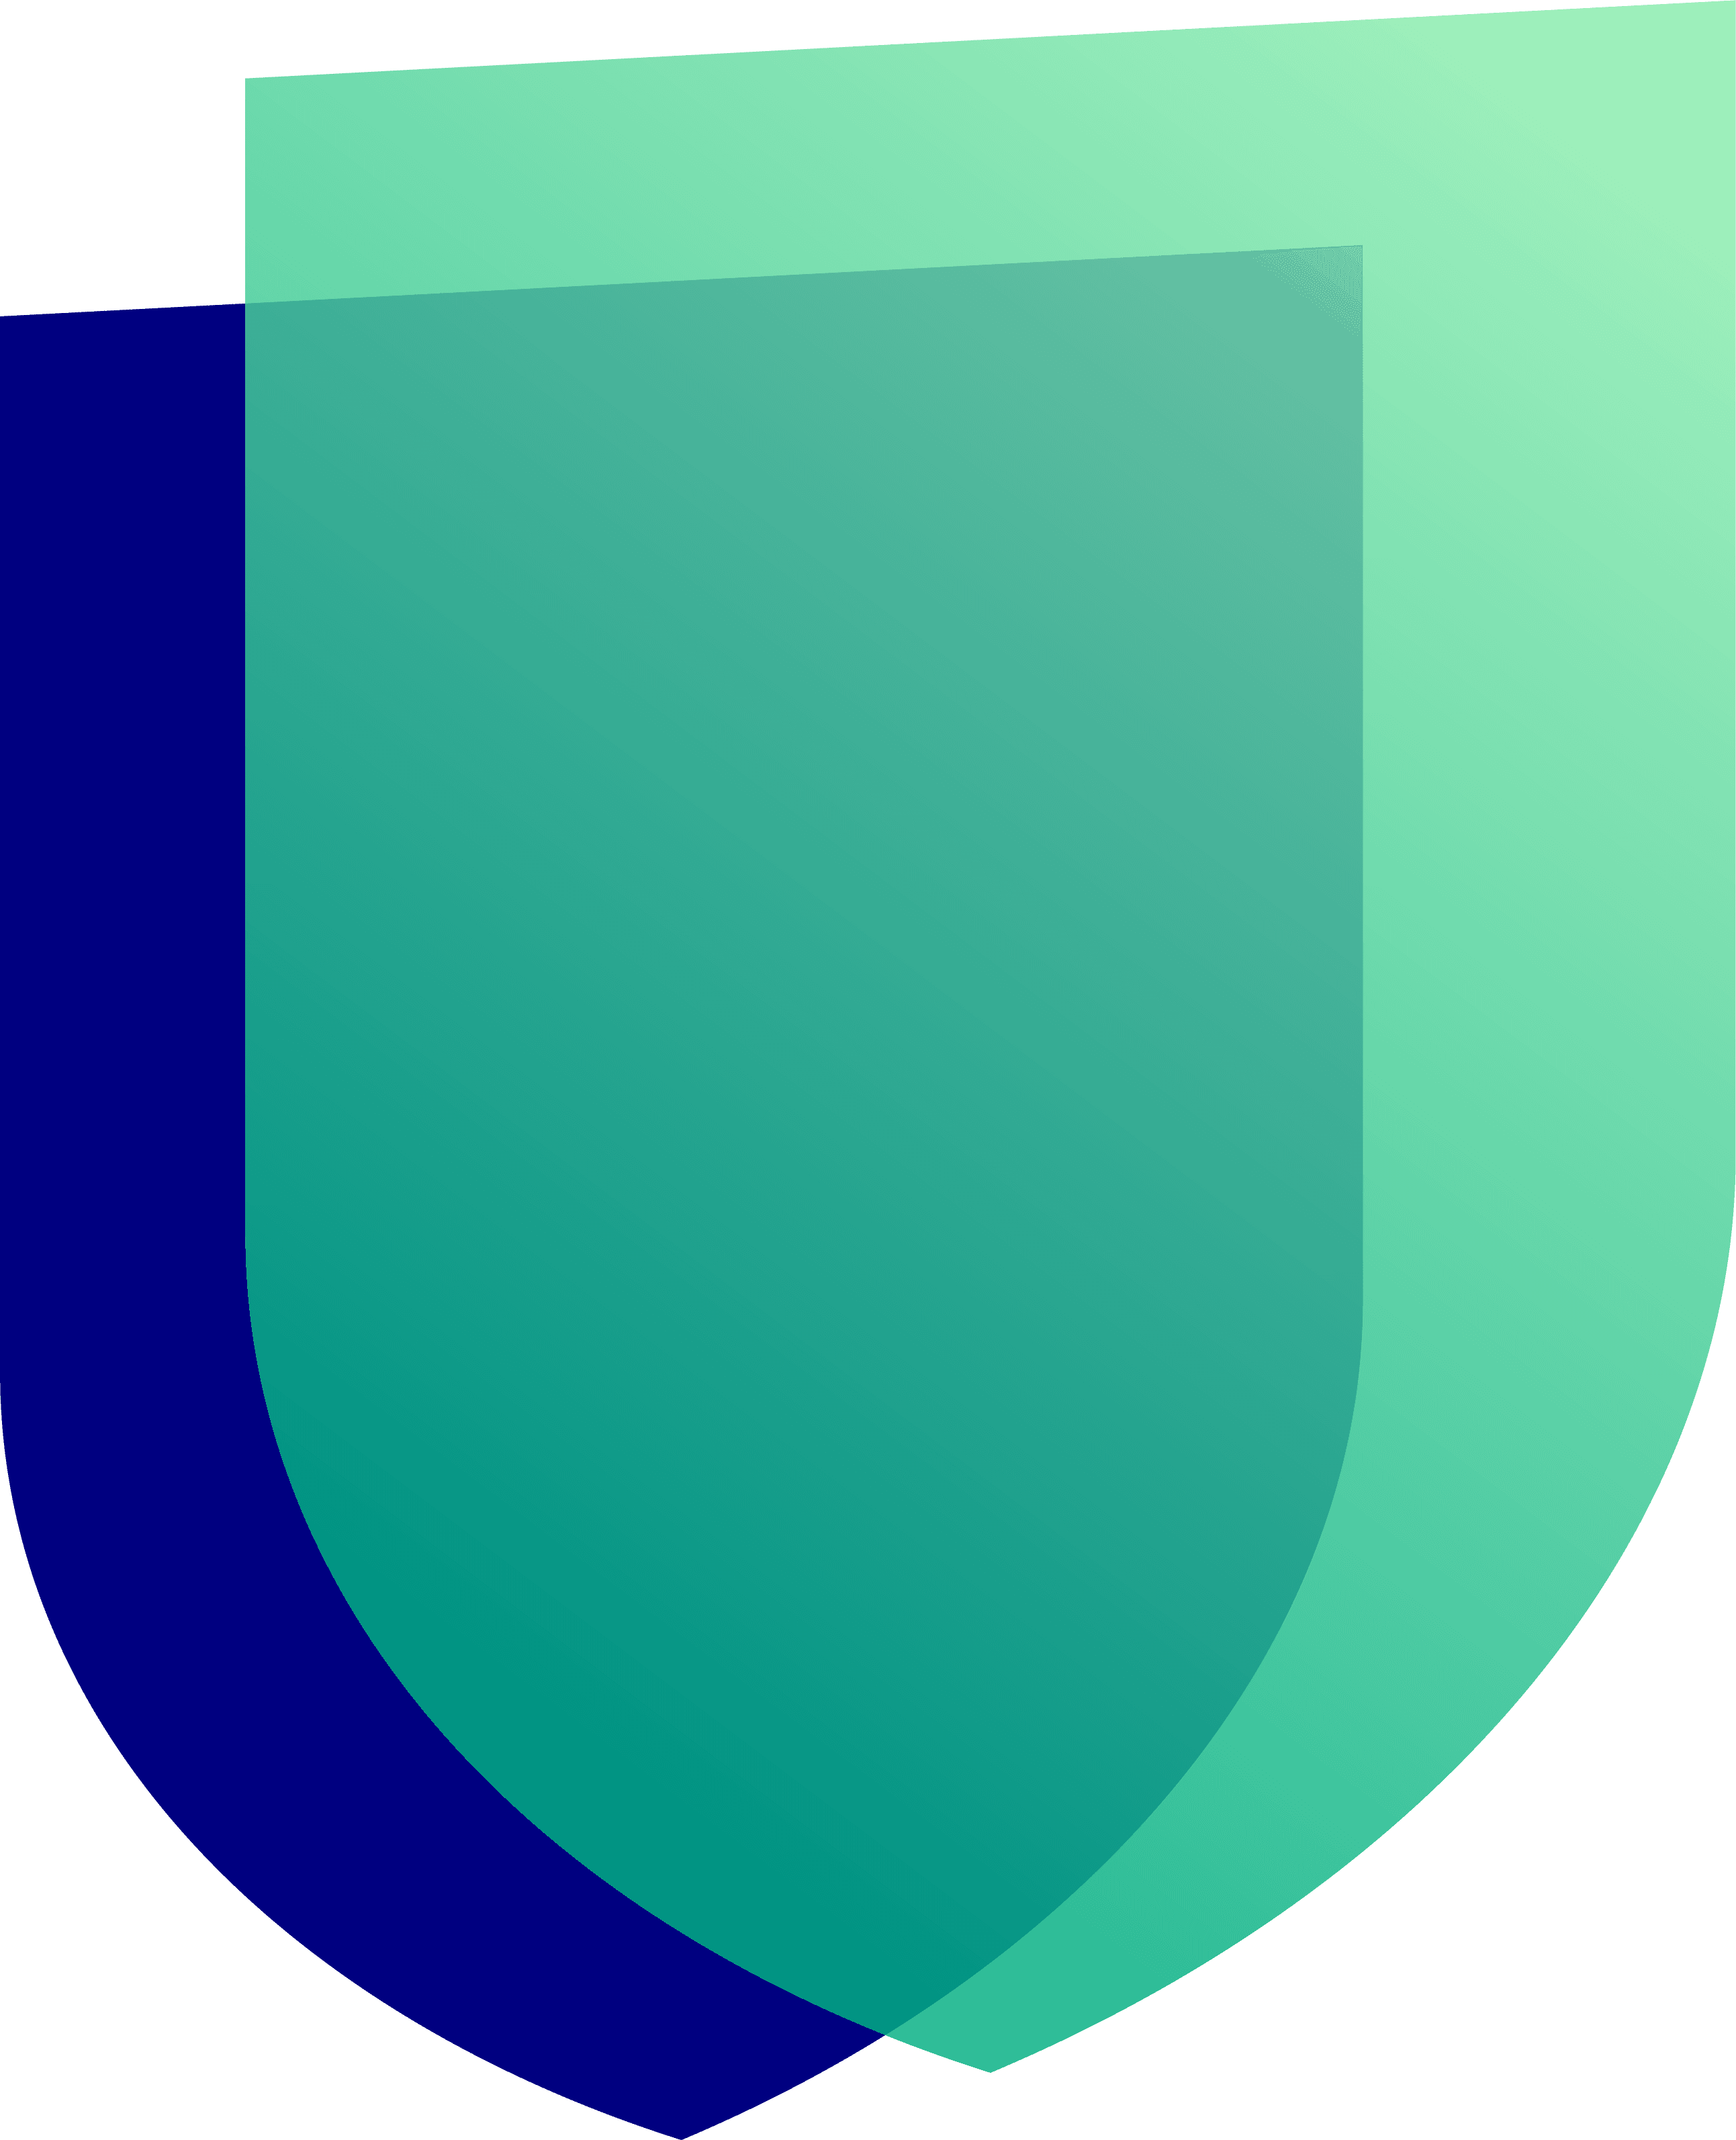 HP shield logo